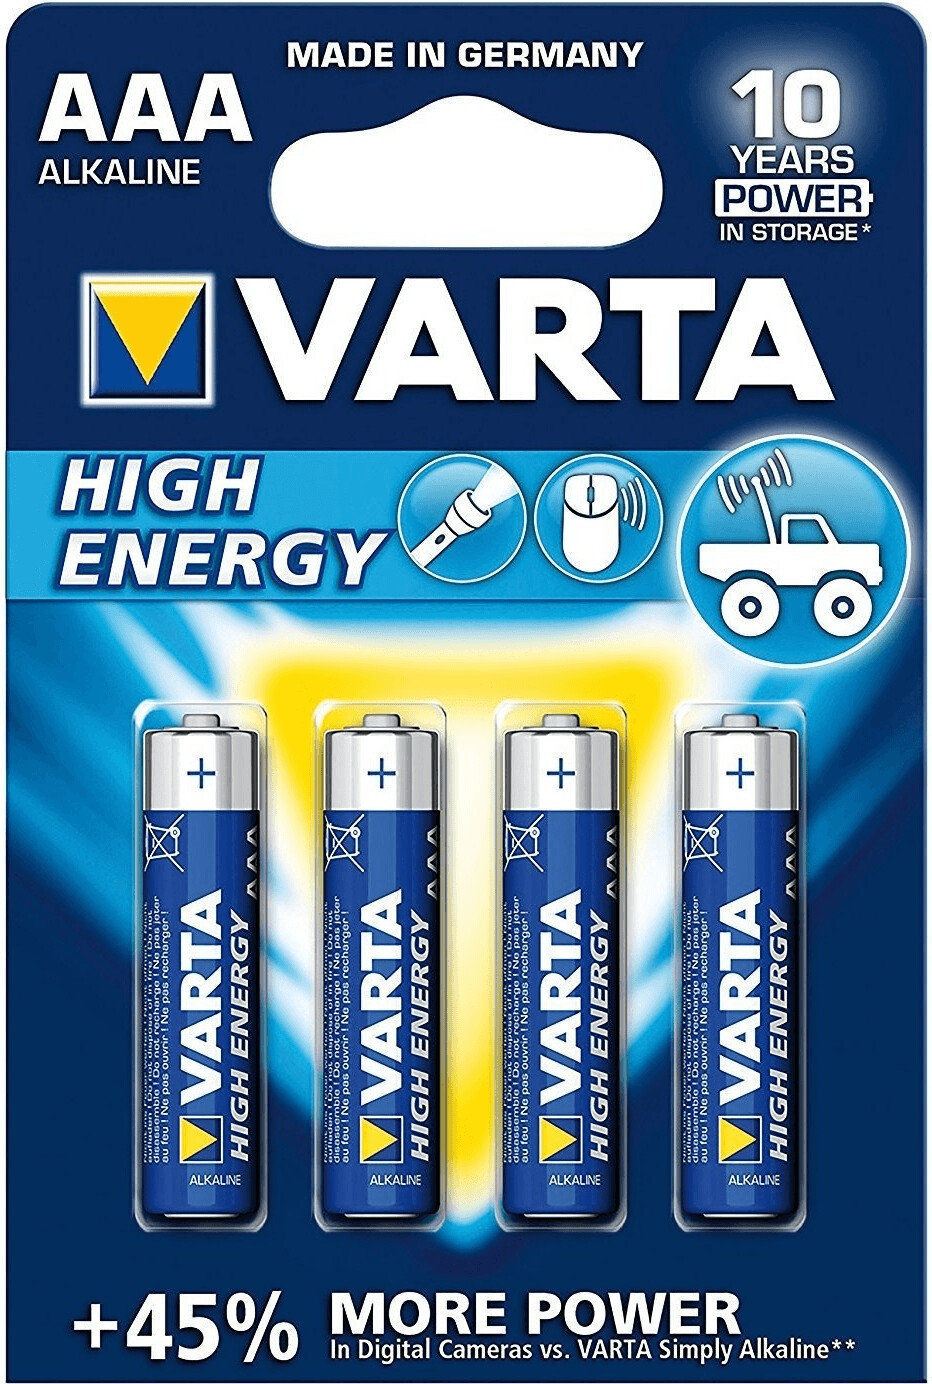 4 piles rechargeables AAA/LR03 Varta - Piles rechargeables Varta